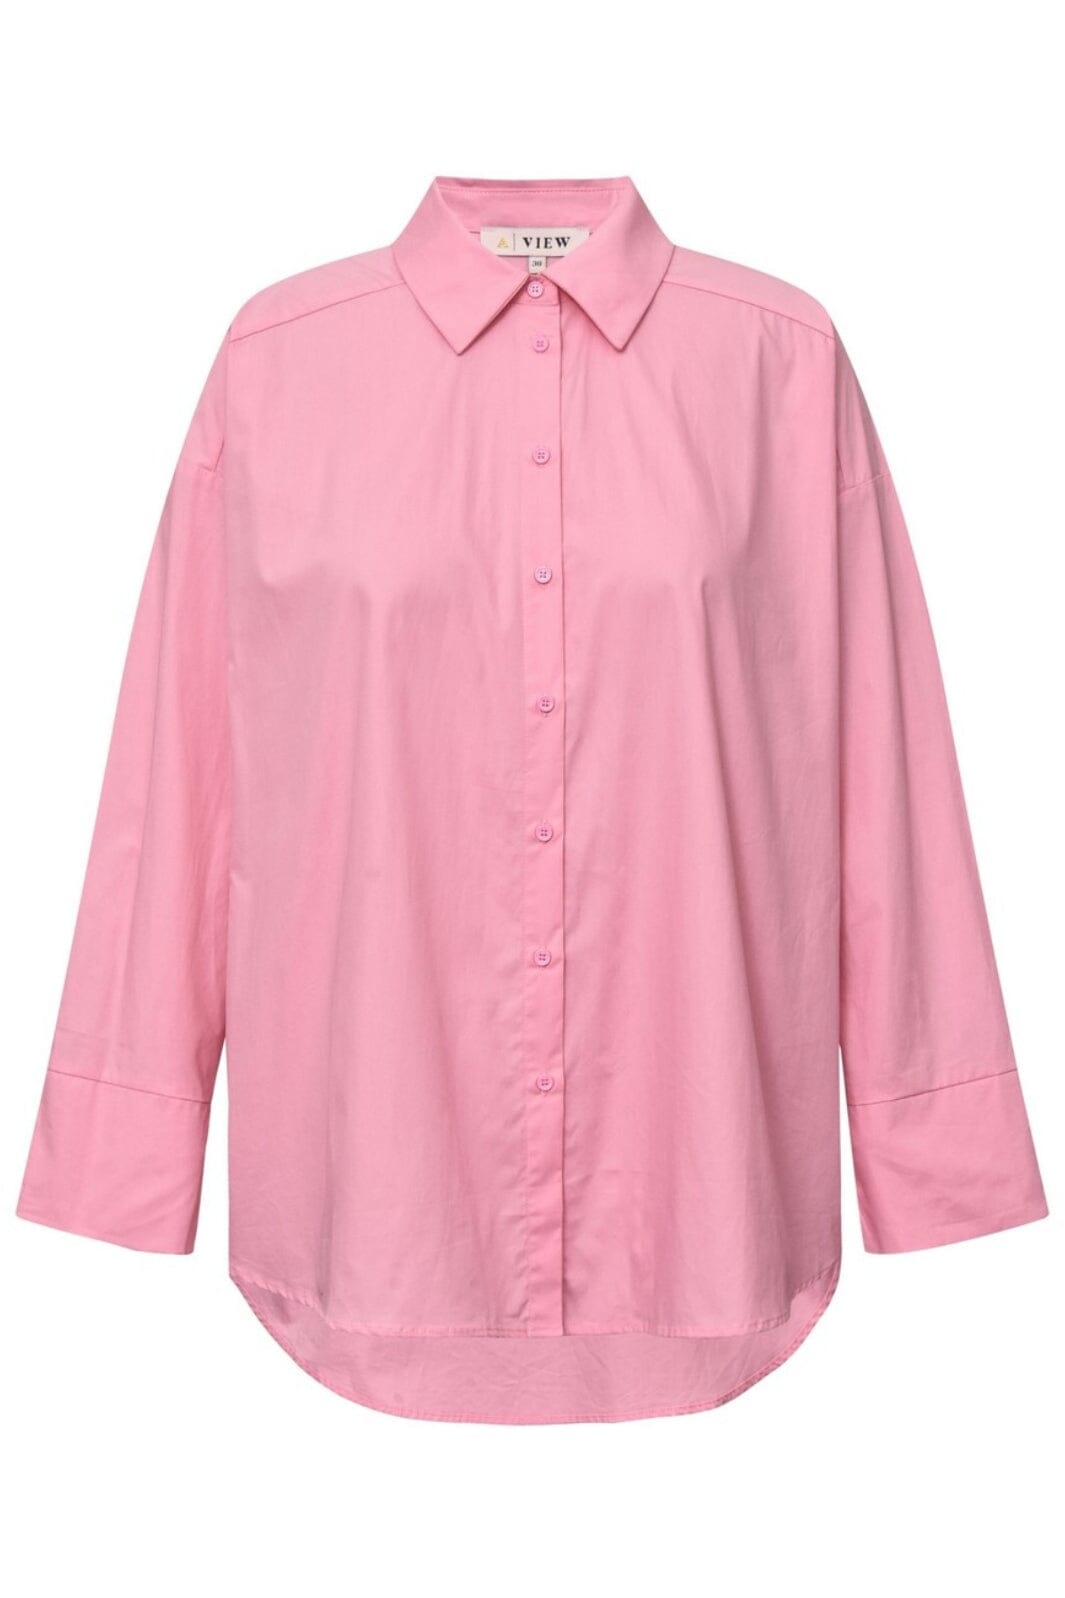 A-View - Magnolia Shirt - 350 Pink Skjorter 